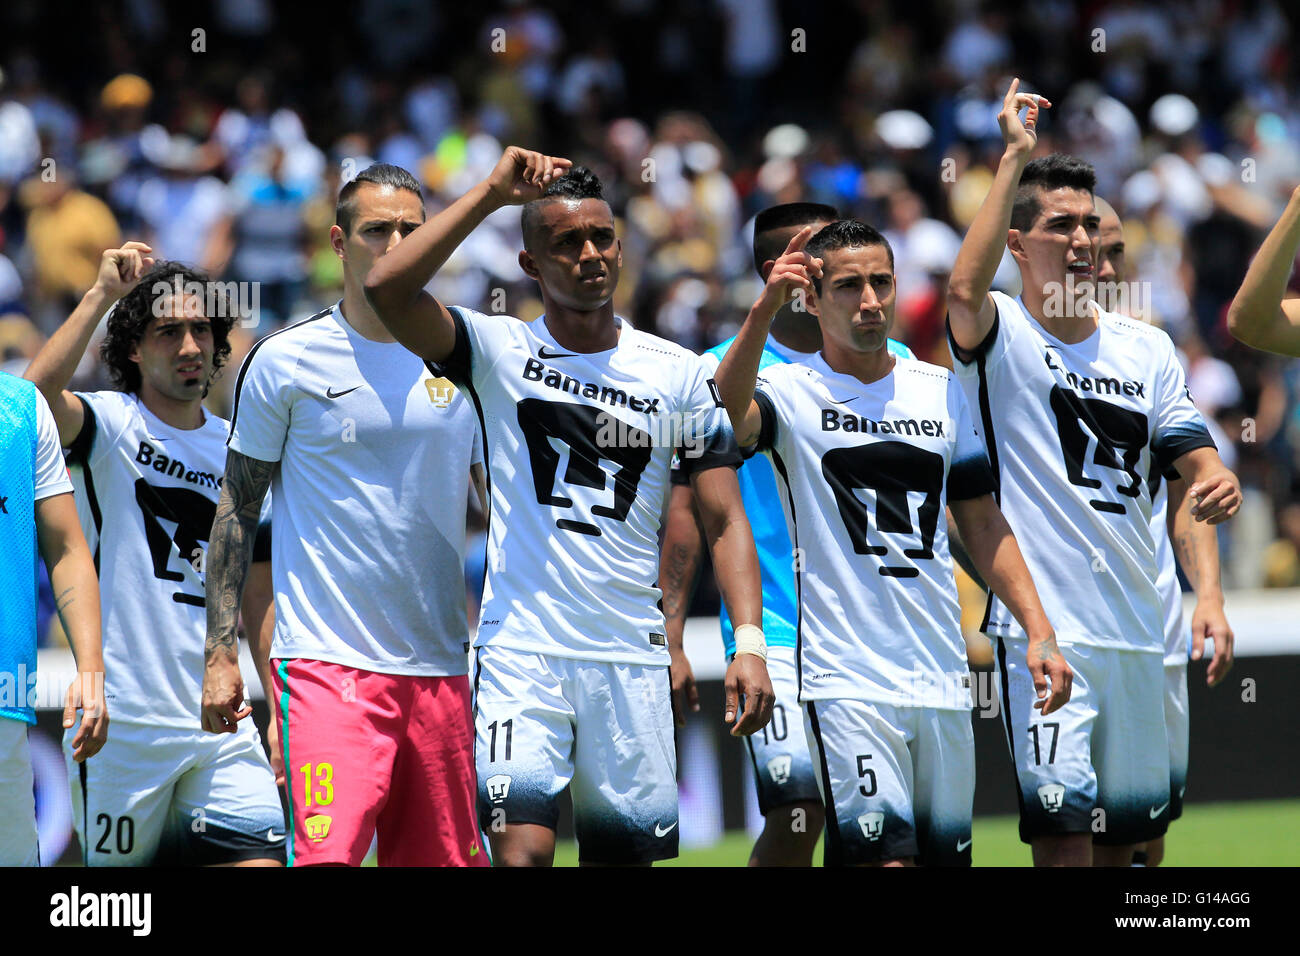 Pumas players react after Stock Photo 